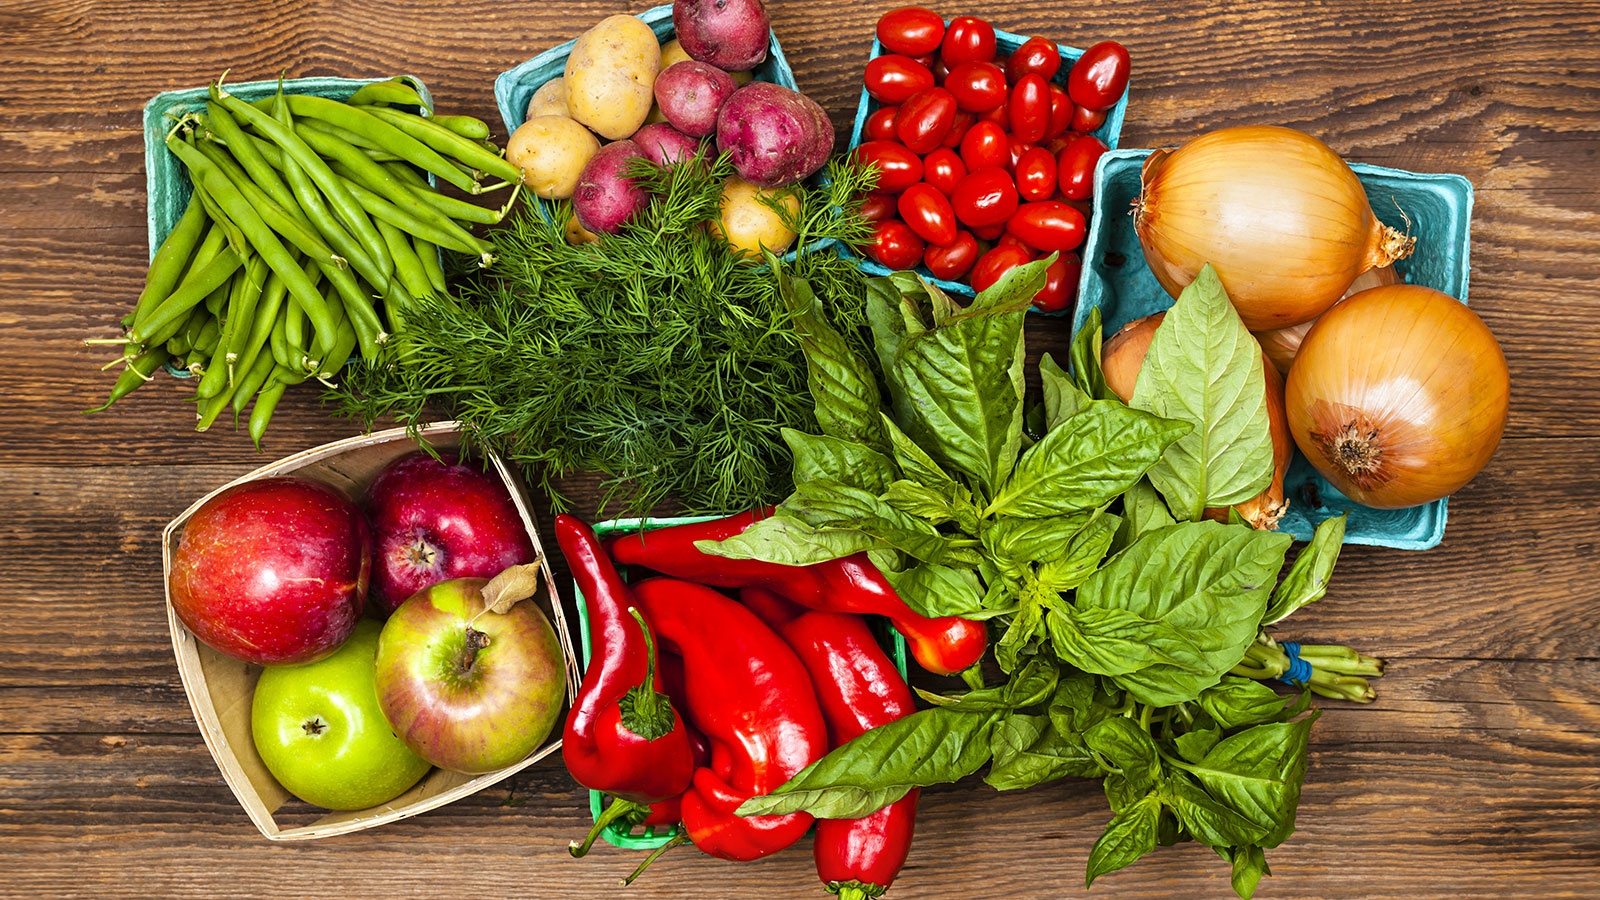 Market Fruits And Vegetables